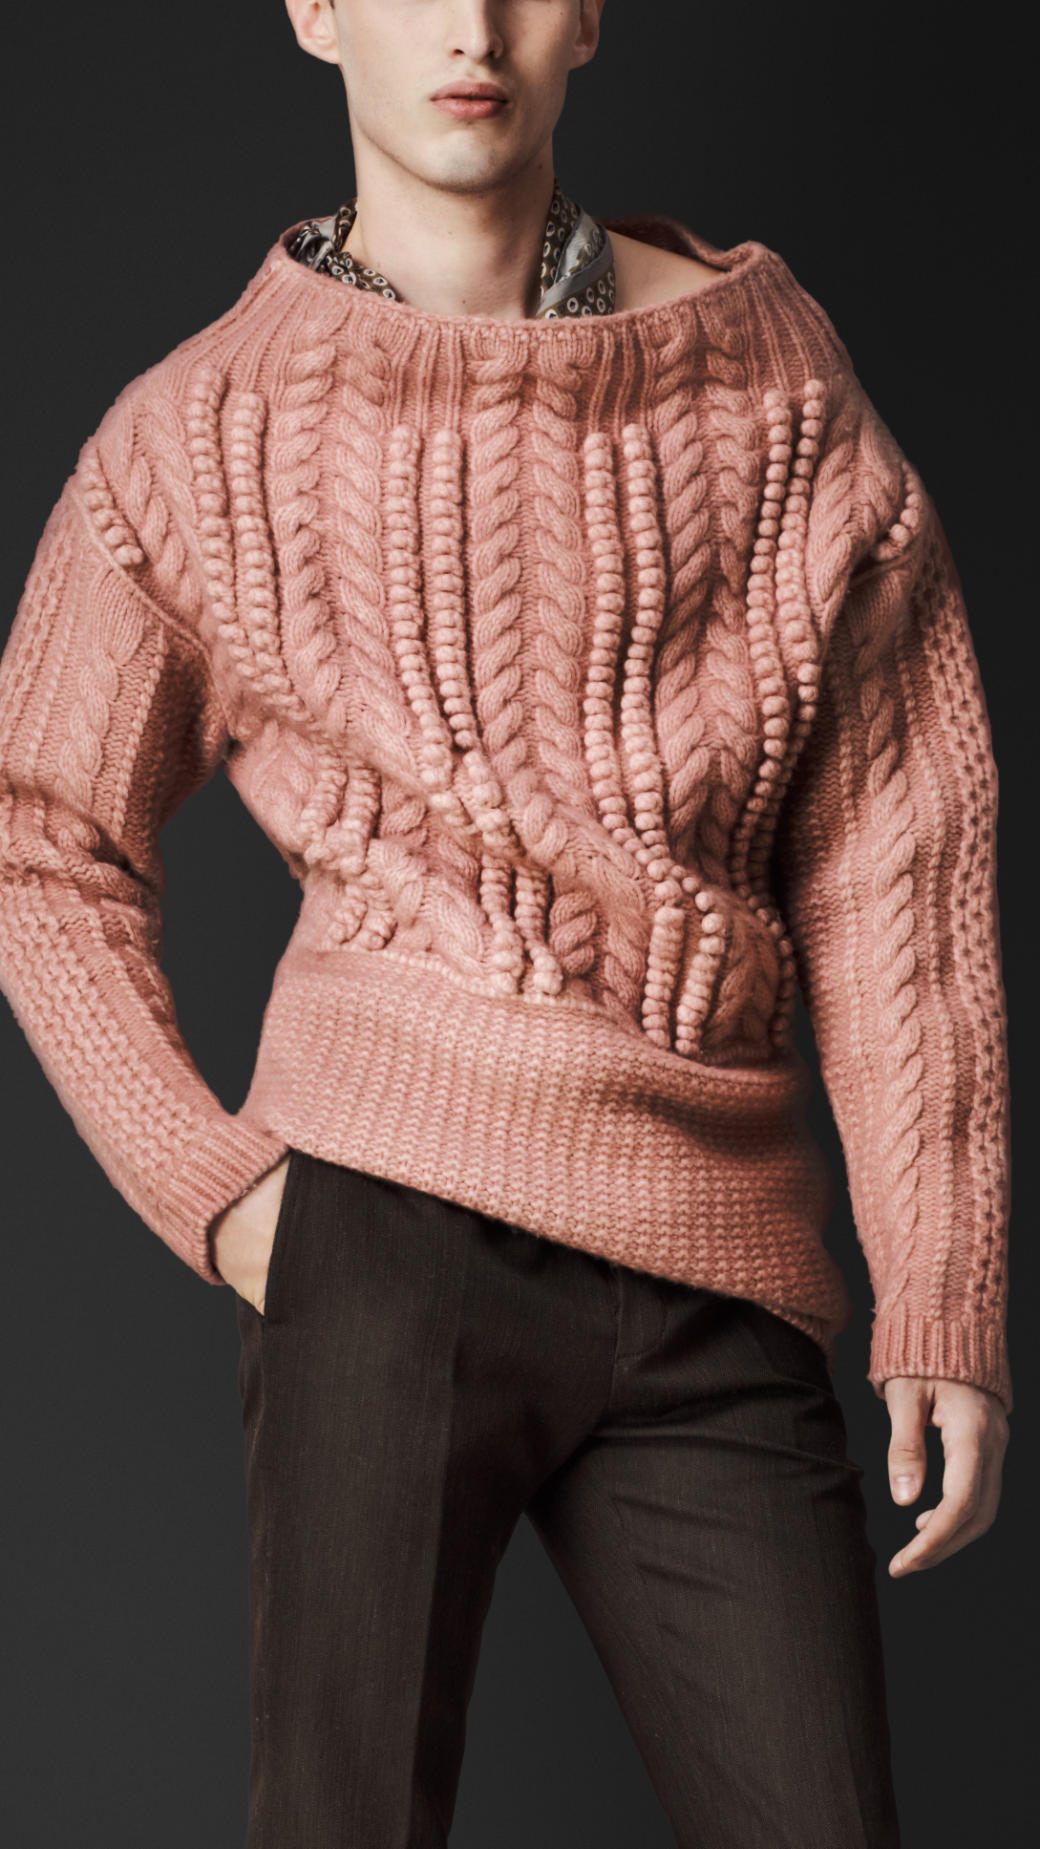 Lyst - Burberry Oversize Aran Knit Sweater in Pink